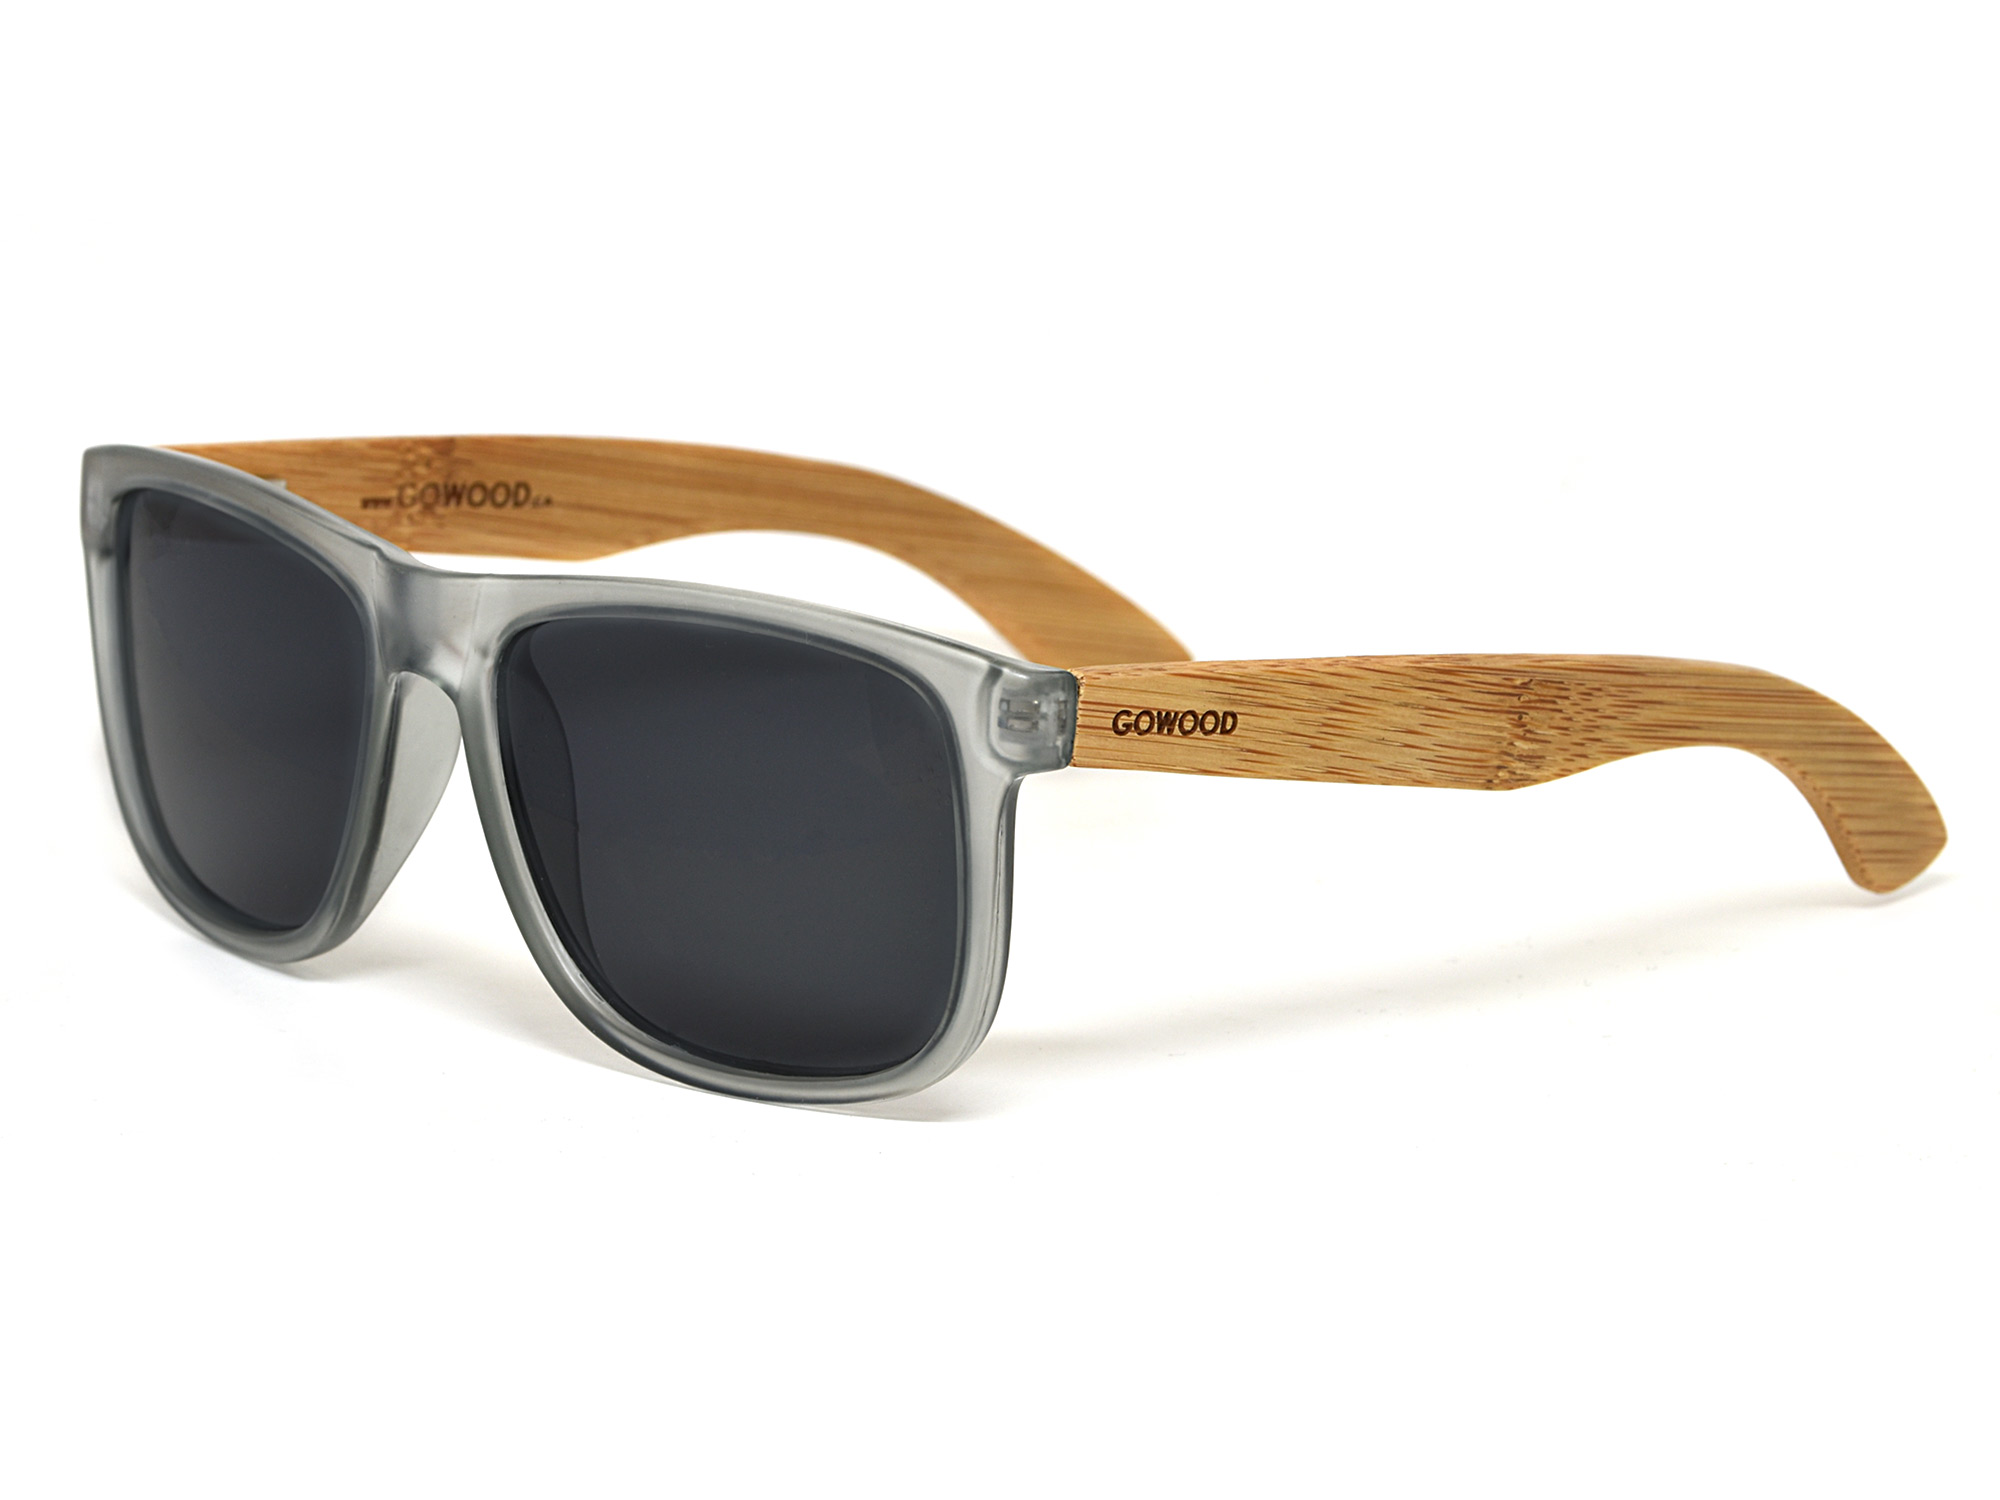 Square bamboo wood sunglasses with black polarized lenses